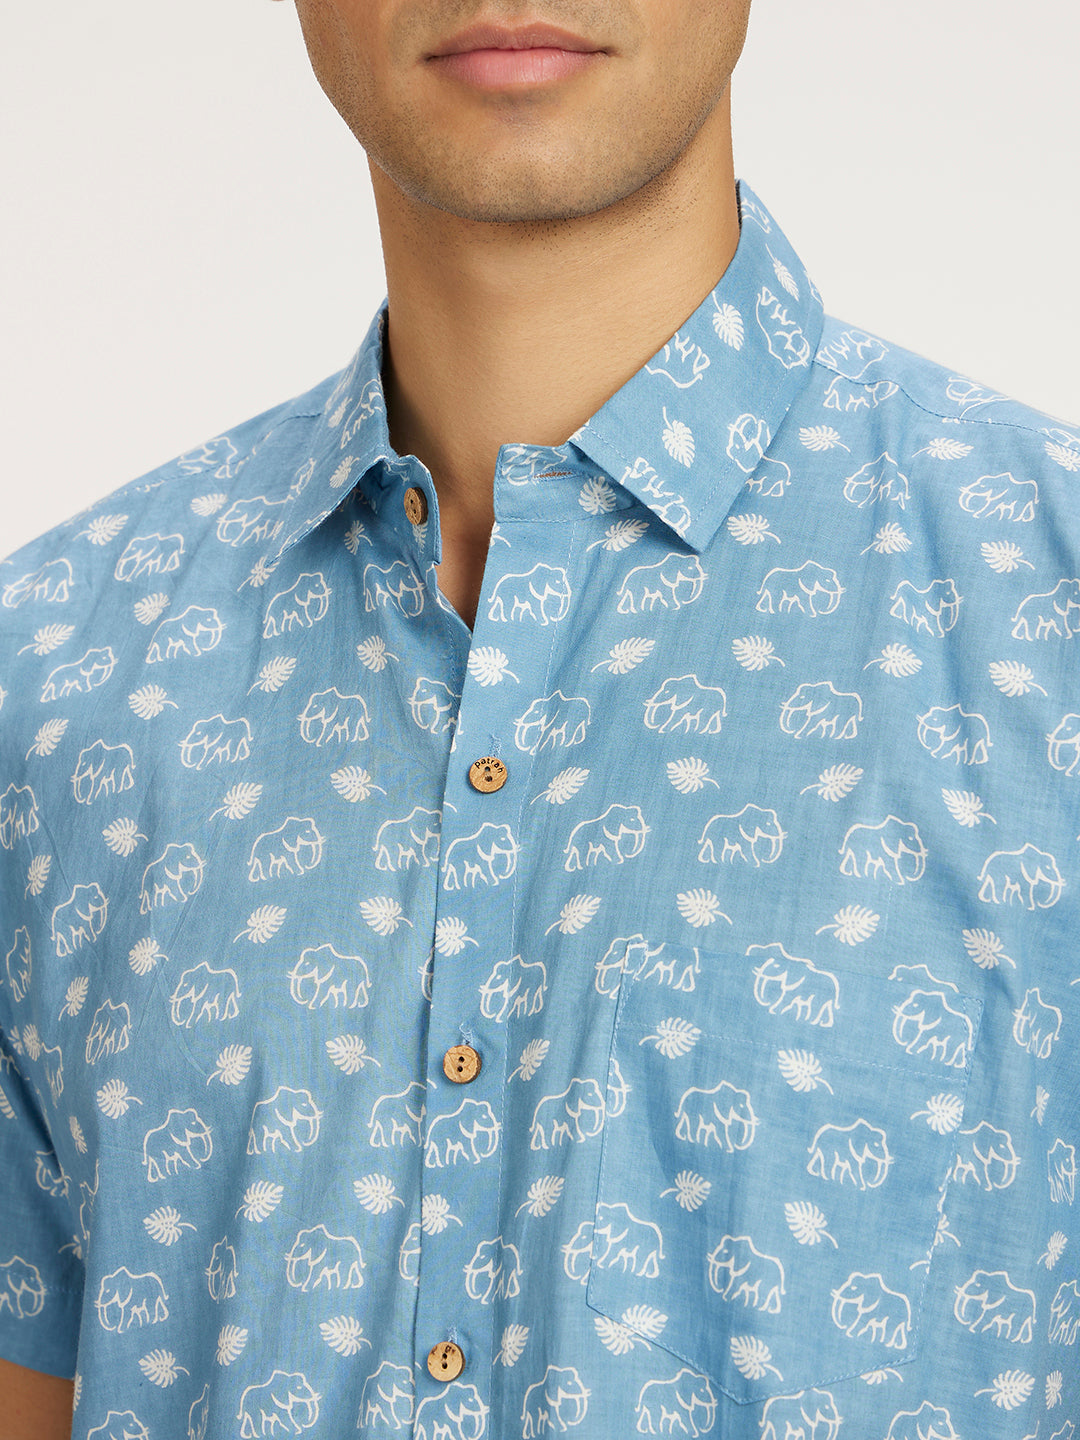 Blue skies white elephant printed shirt Printed Halfsleeves Cotton Shirt